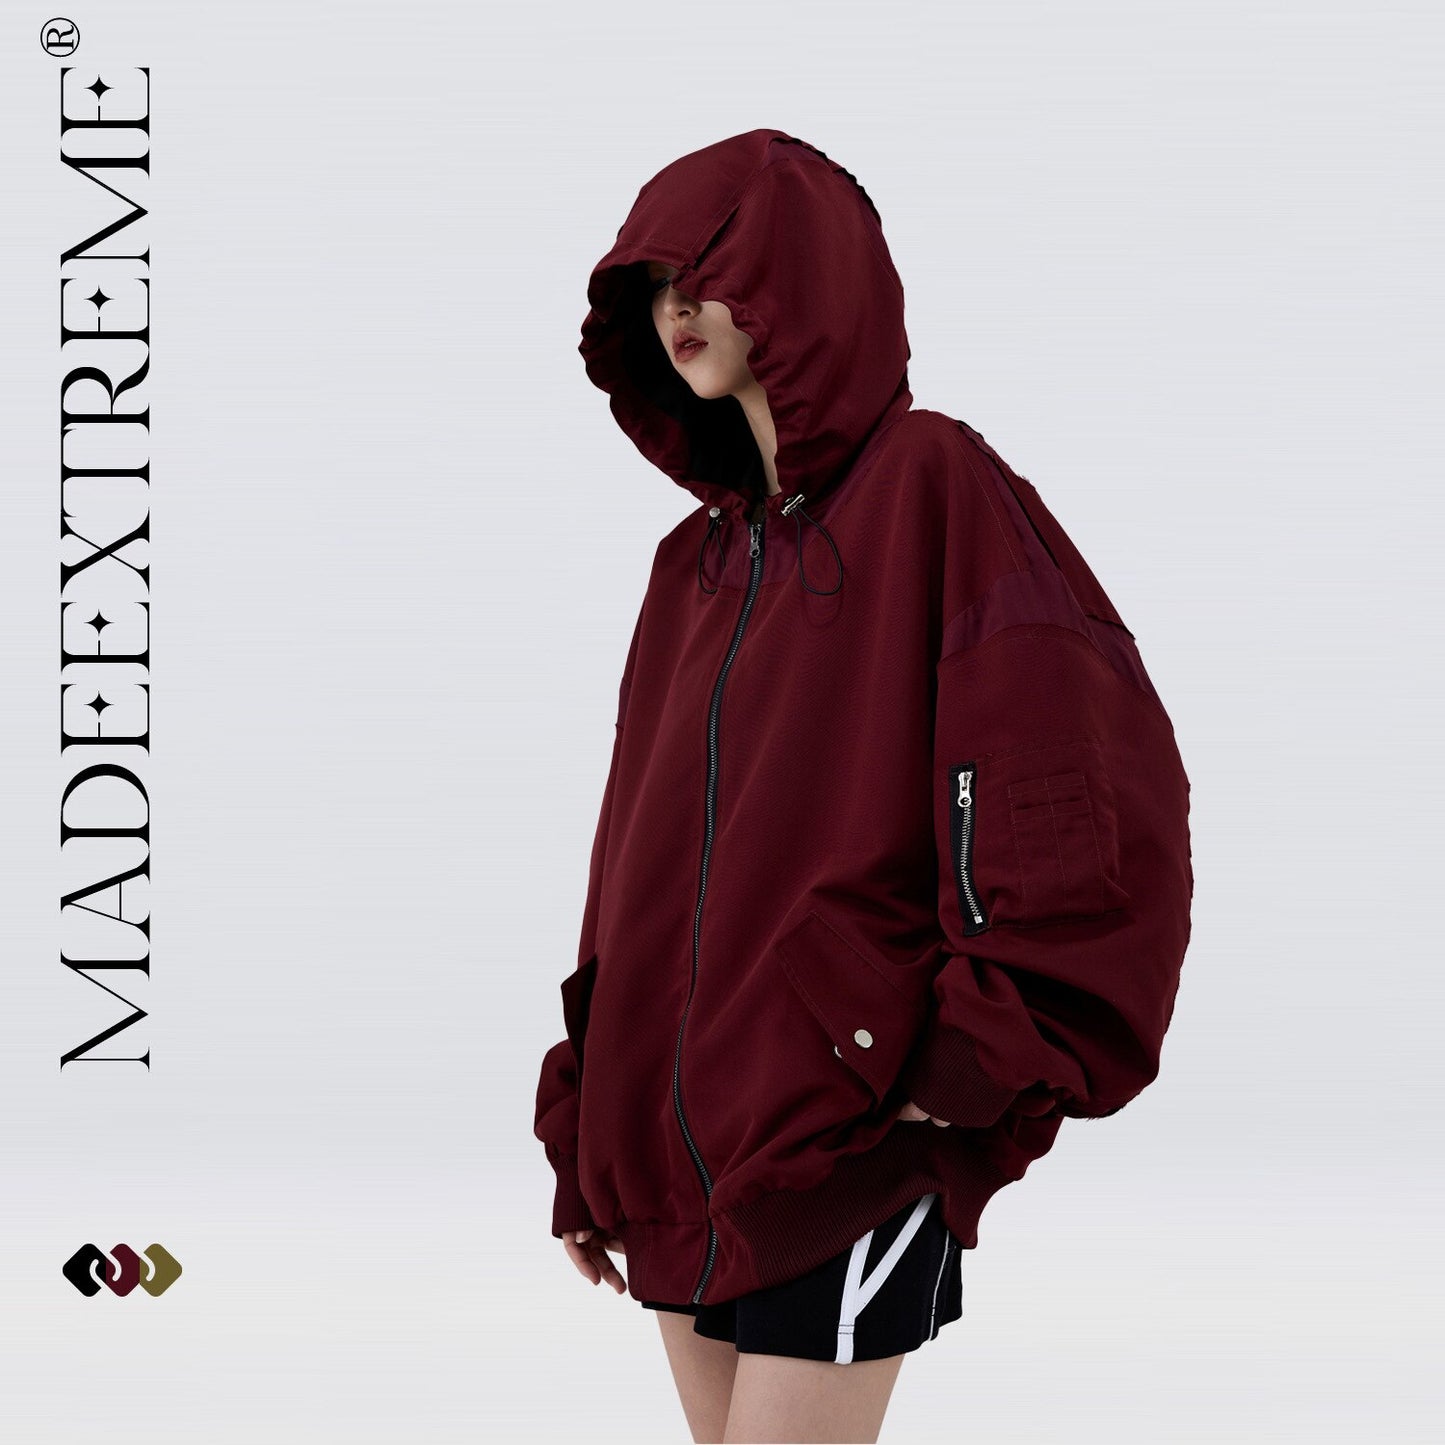 MADEEXTREME patchwork design hooded jacket